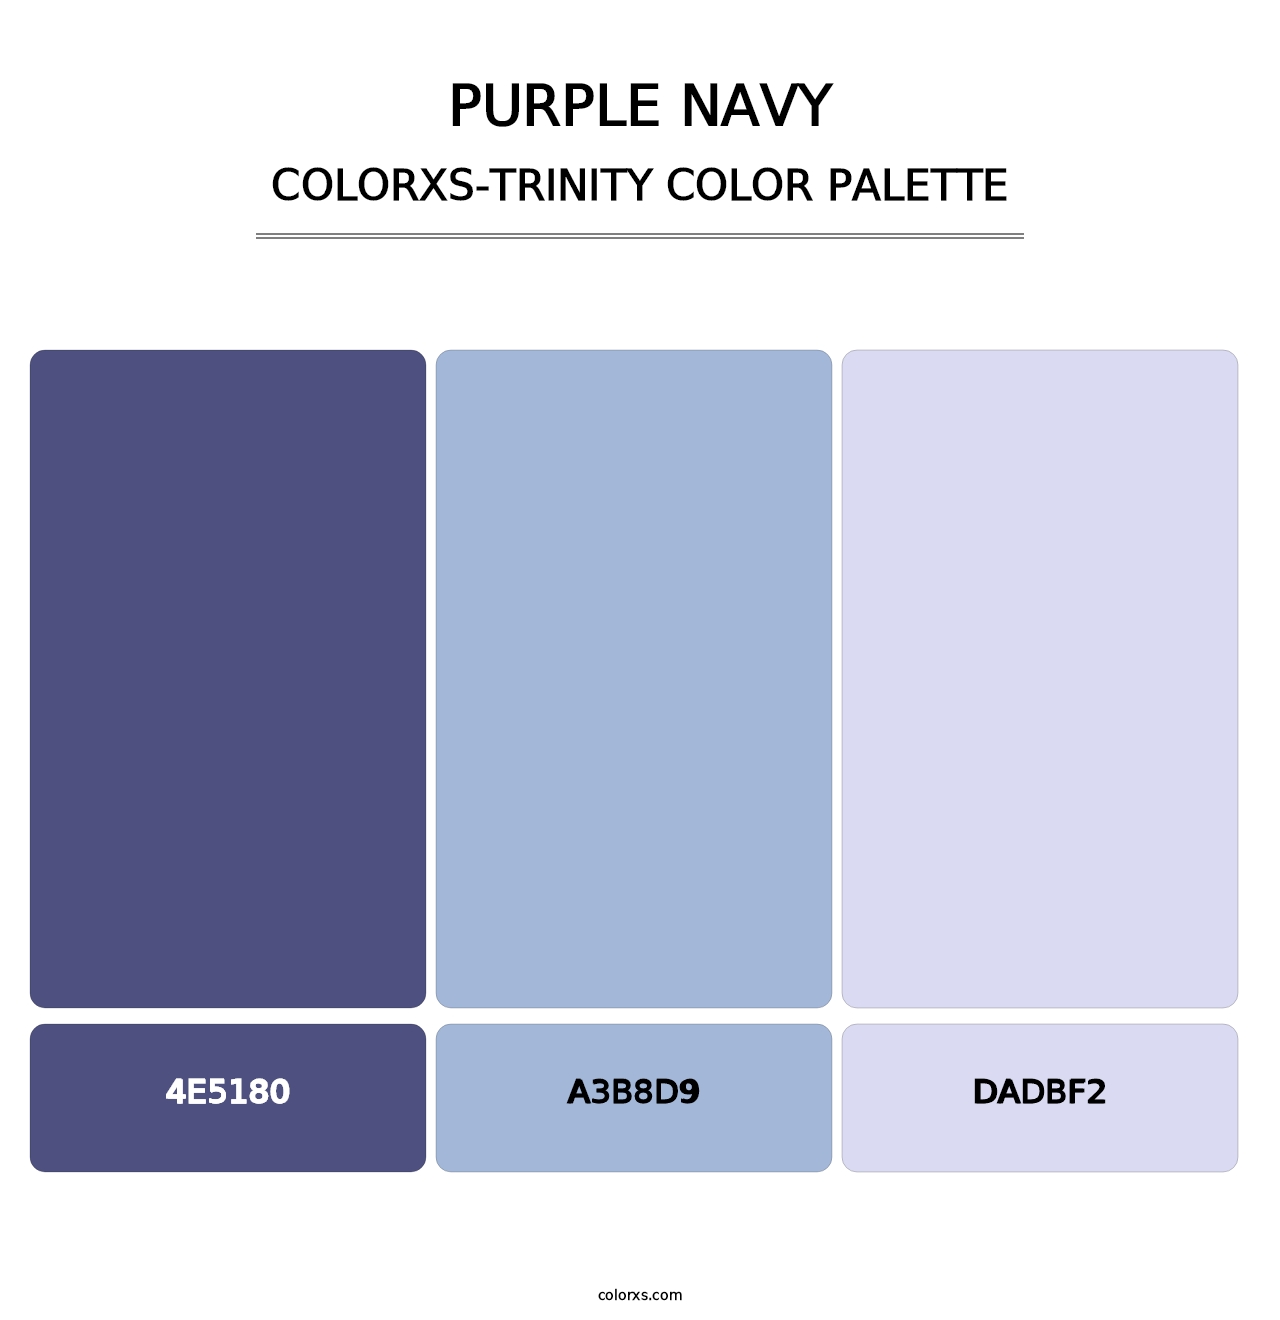 Purple Navy - Colorxs Trinity Palette